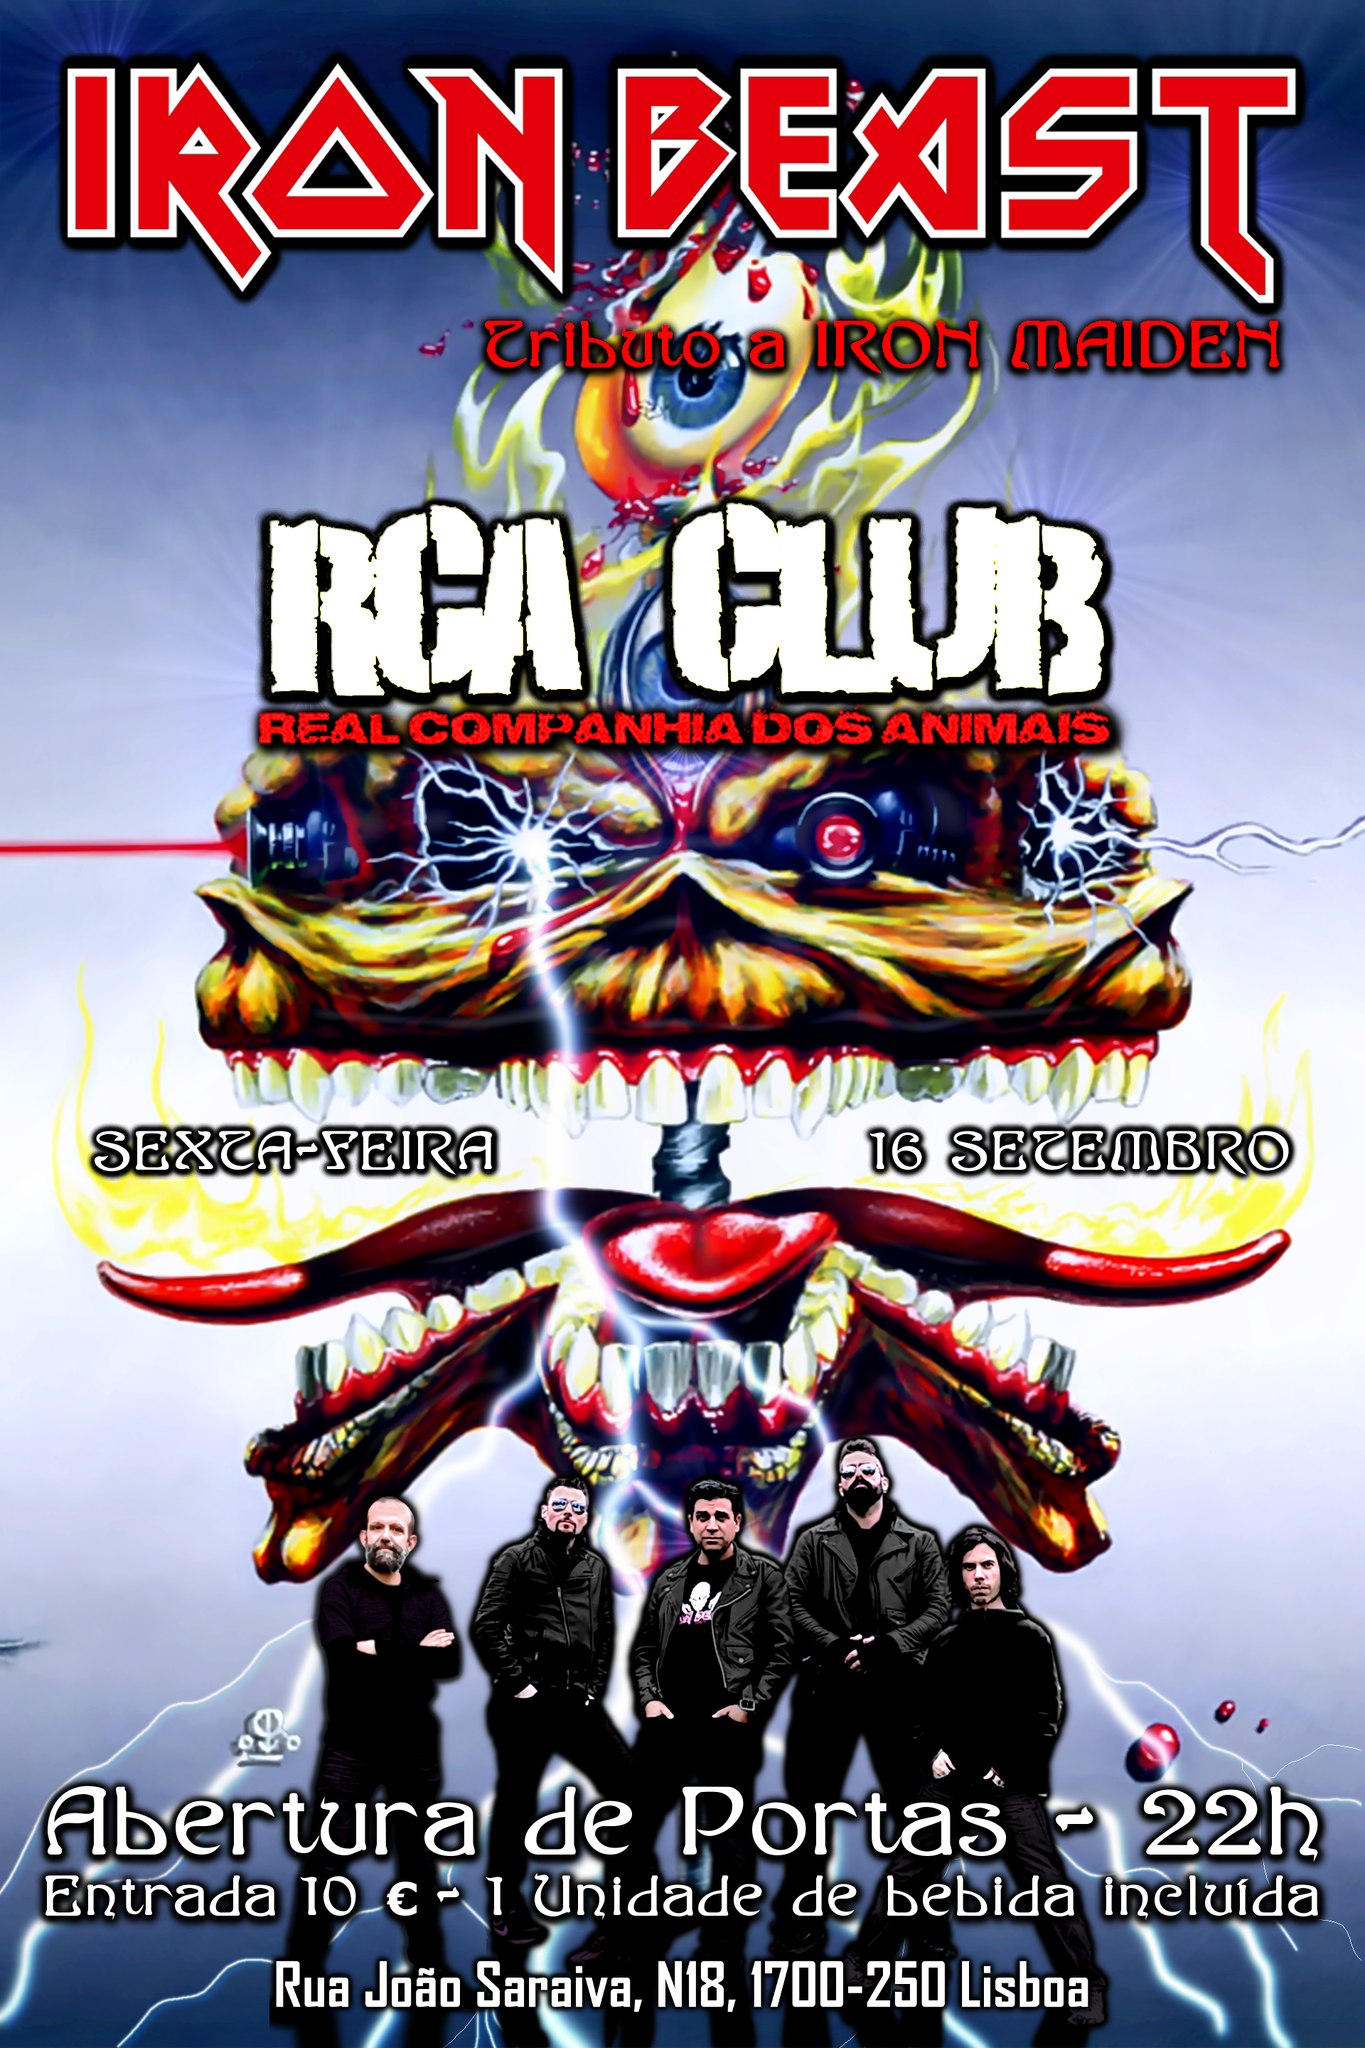 Iron Beast @ RCA CLUB